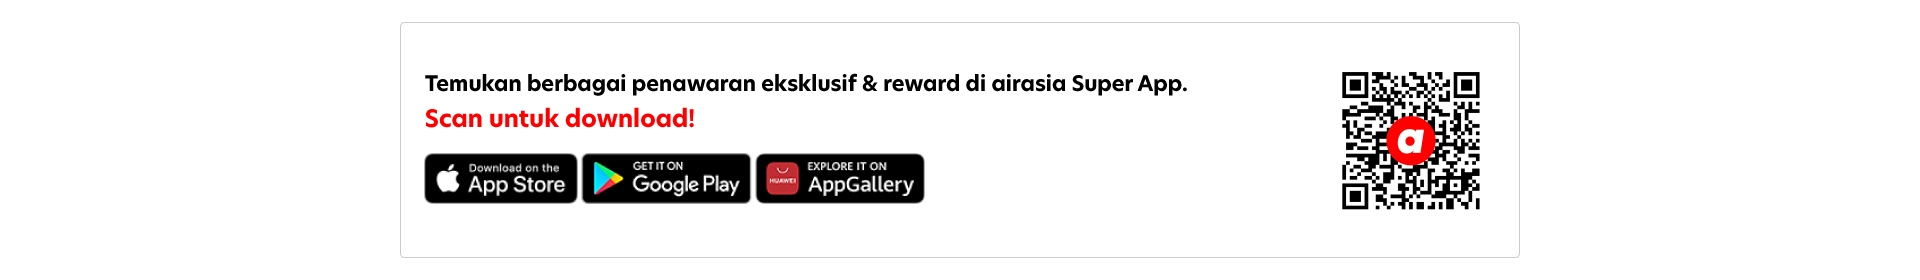 Download_airasia_Super_App_ID